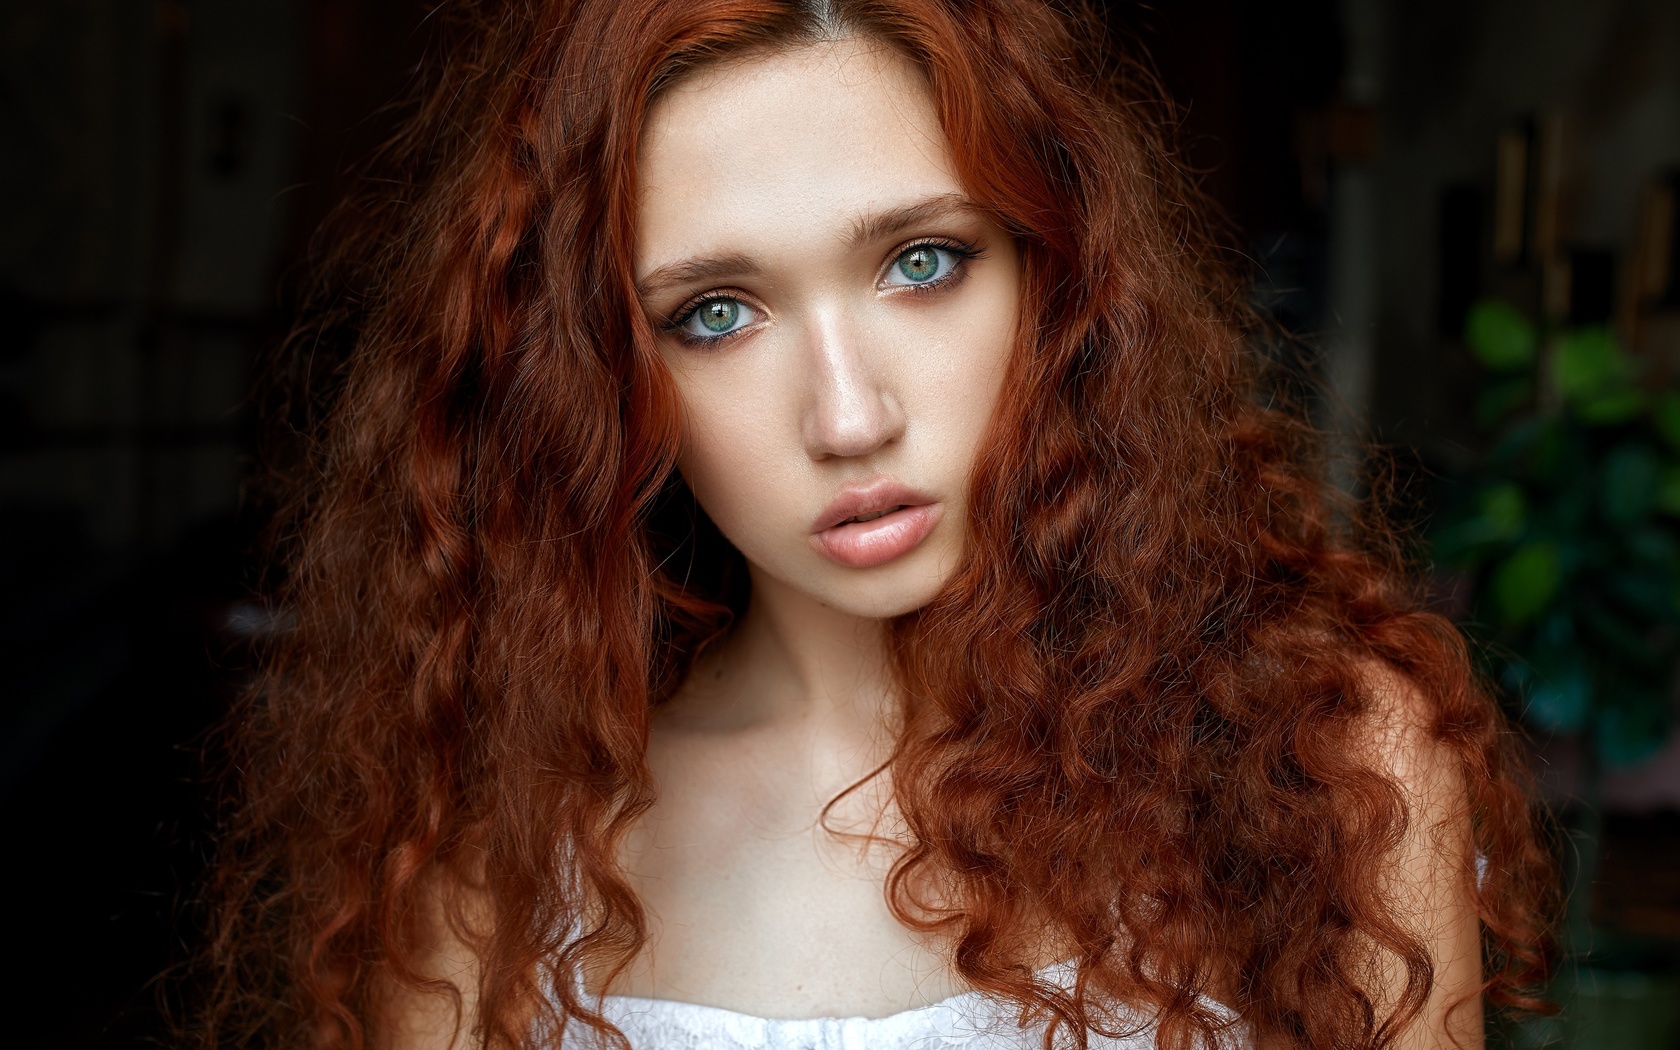 women, redhead, face, portrait, pink lipstick, green eyes, white dress,  